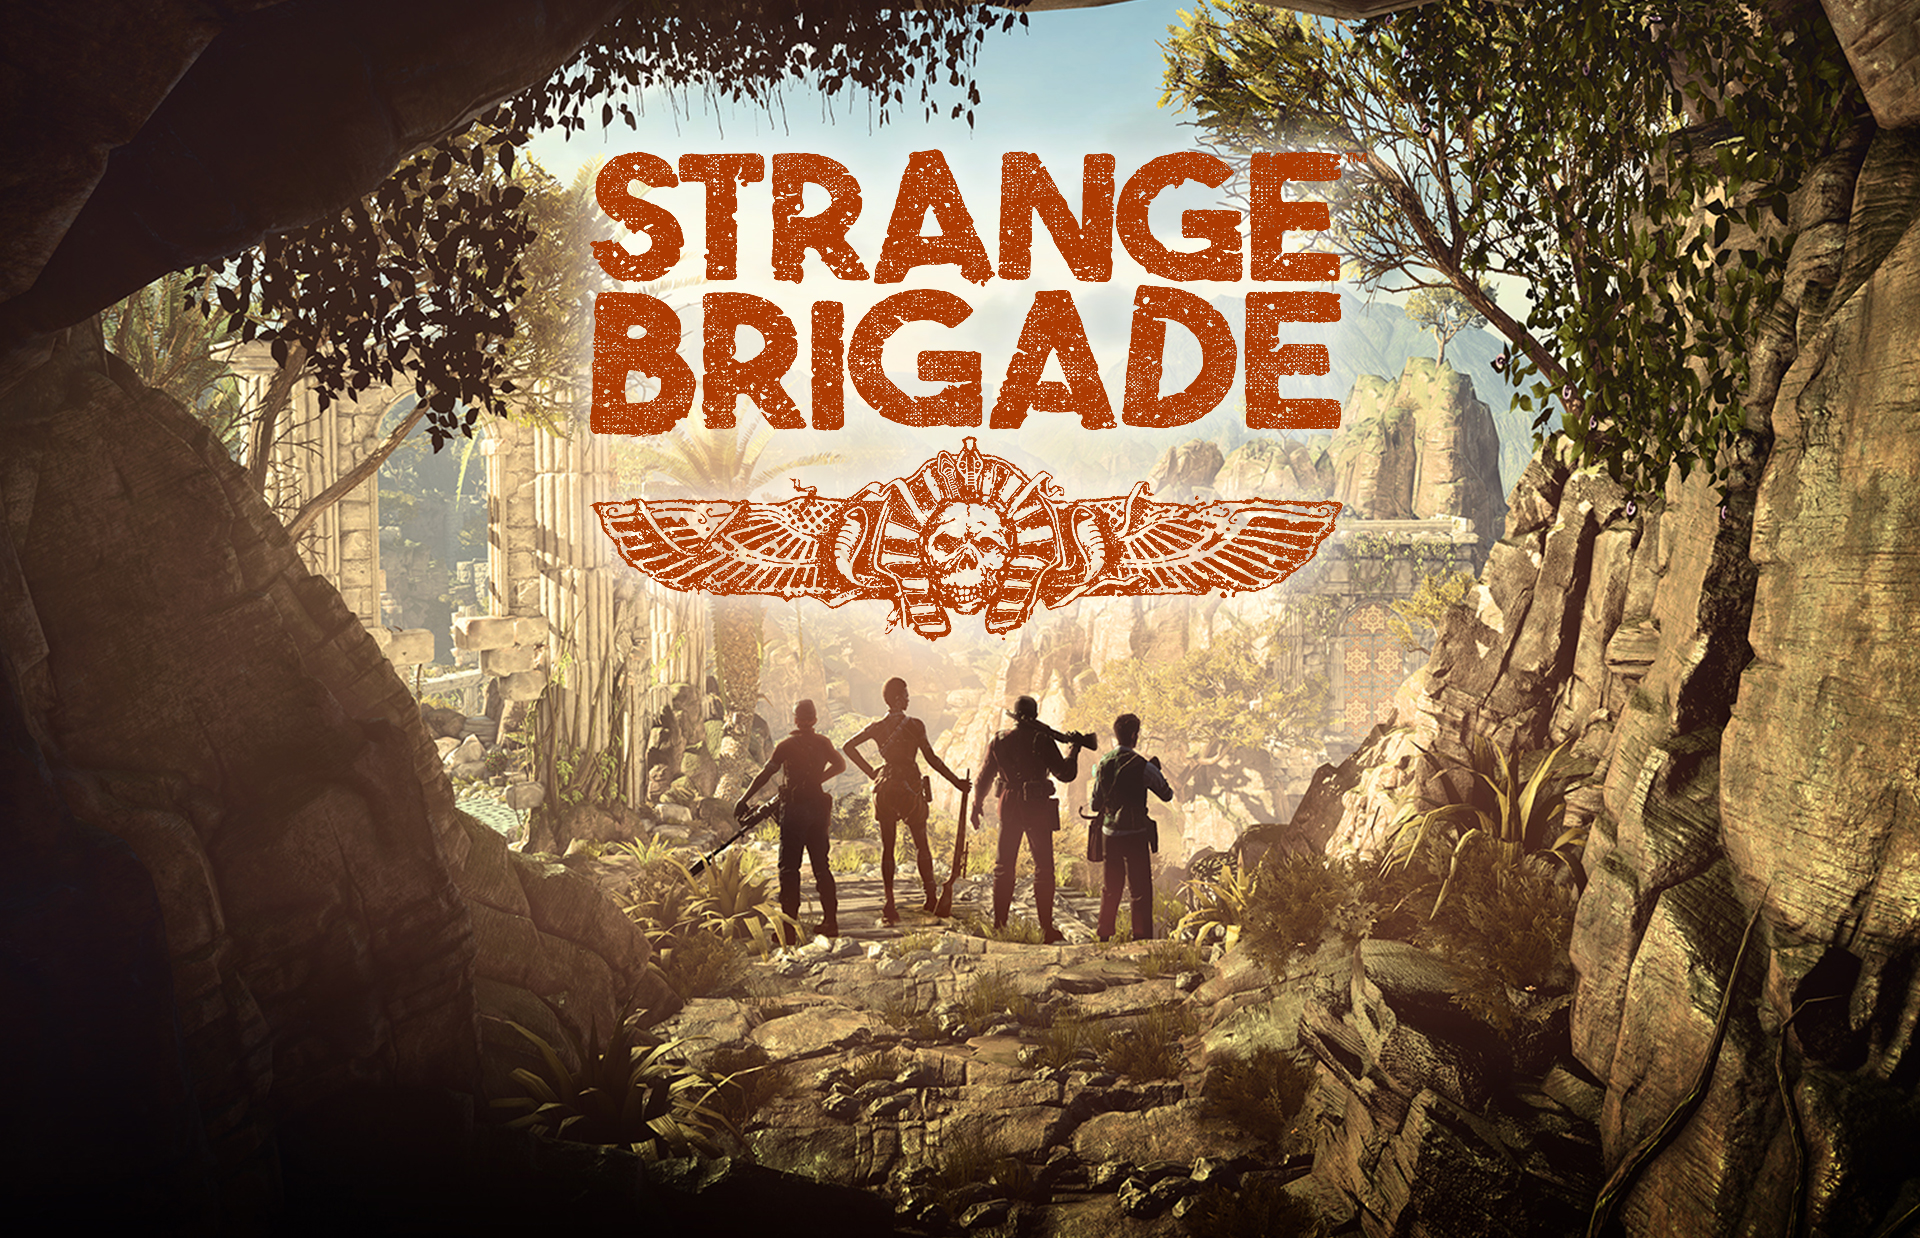 Strange_brigade_art